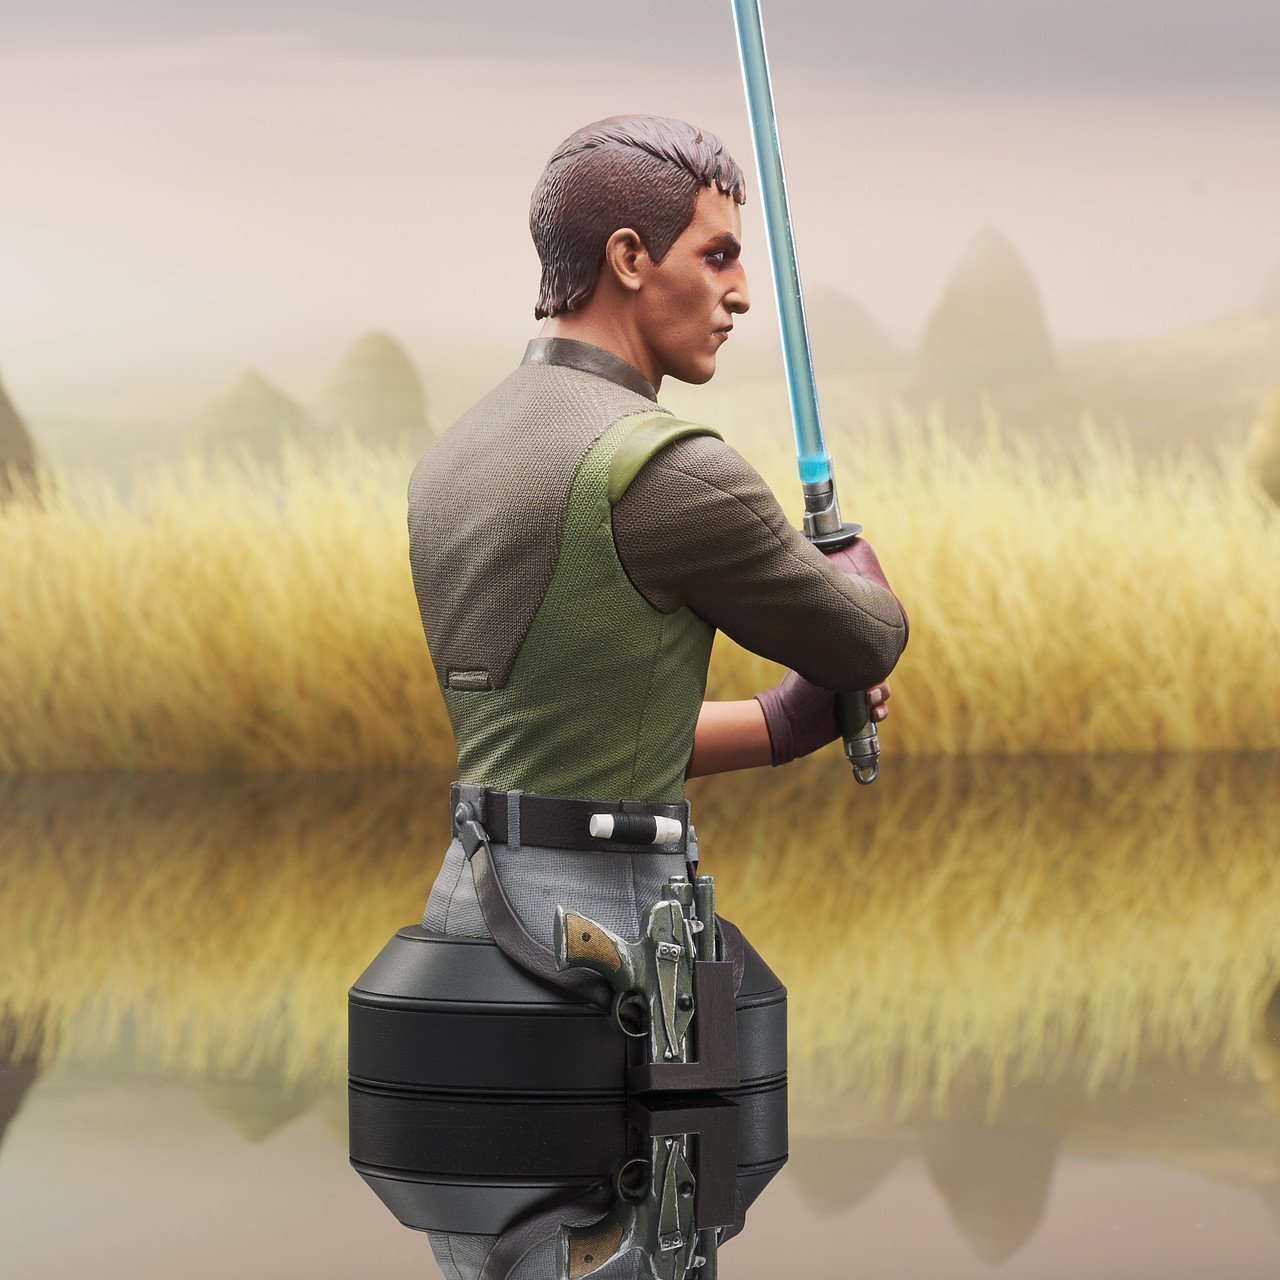 Star Wars: Rebels™ - Kanan Jarrus Mini Bust